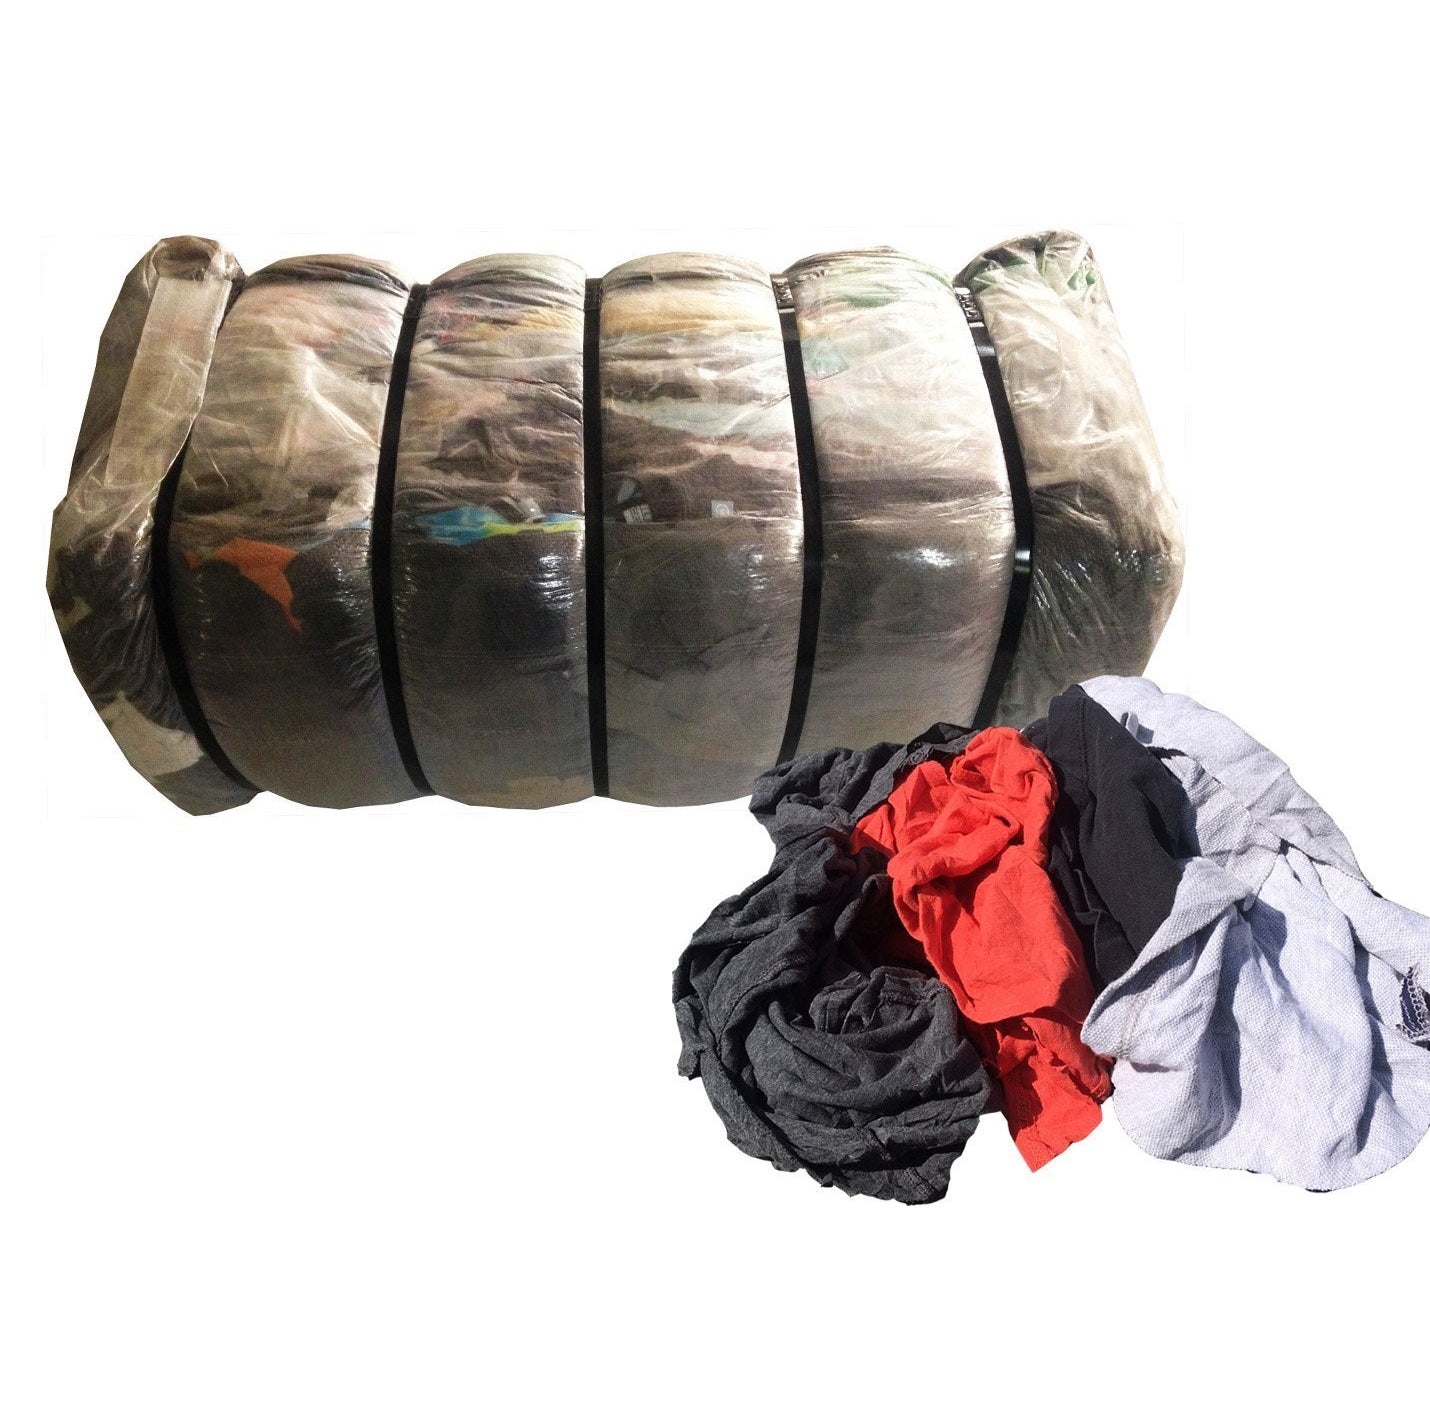 Recycled White Cotton Rags - 1000 Pound Pallet - Cotton, Prewashed